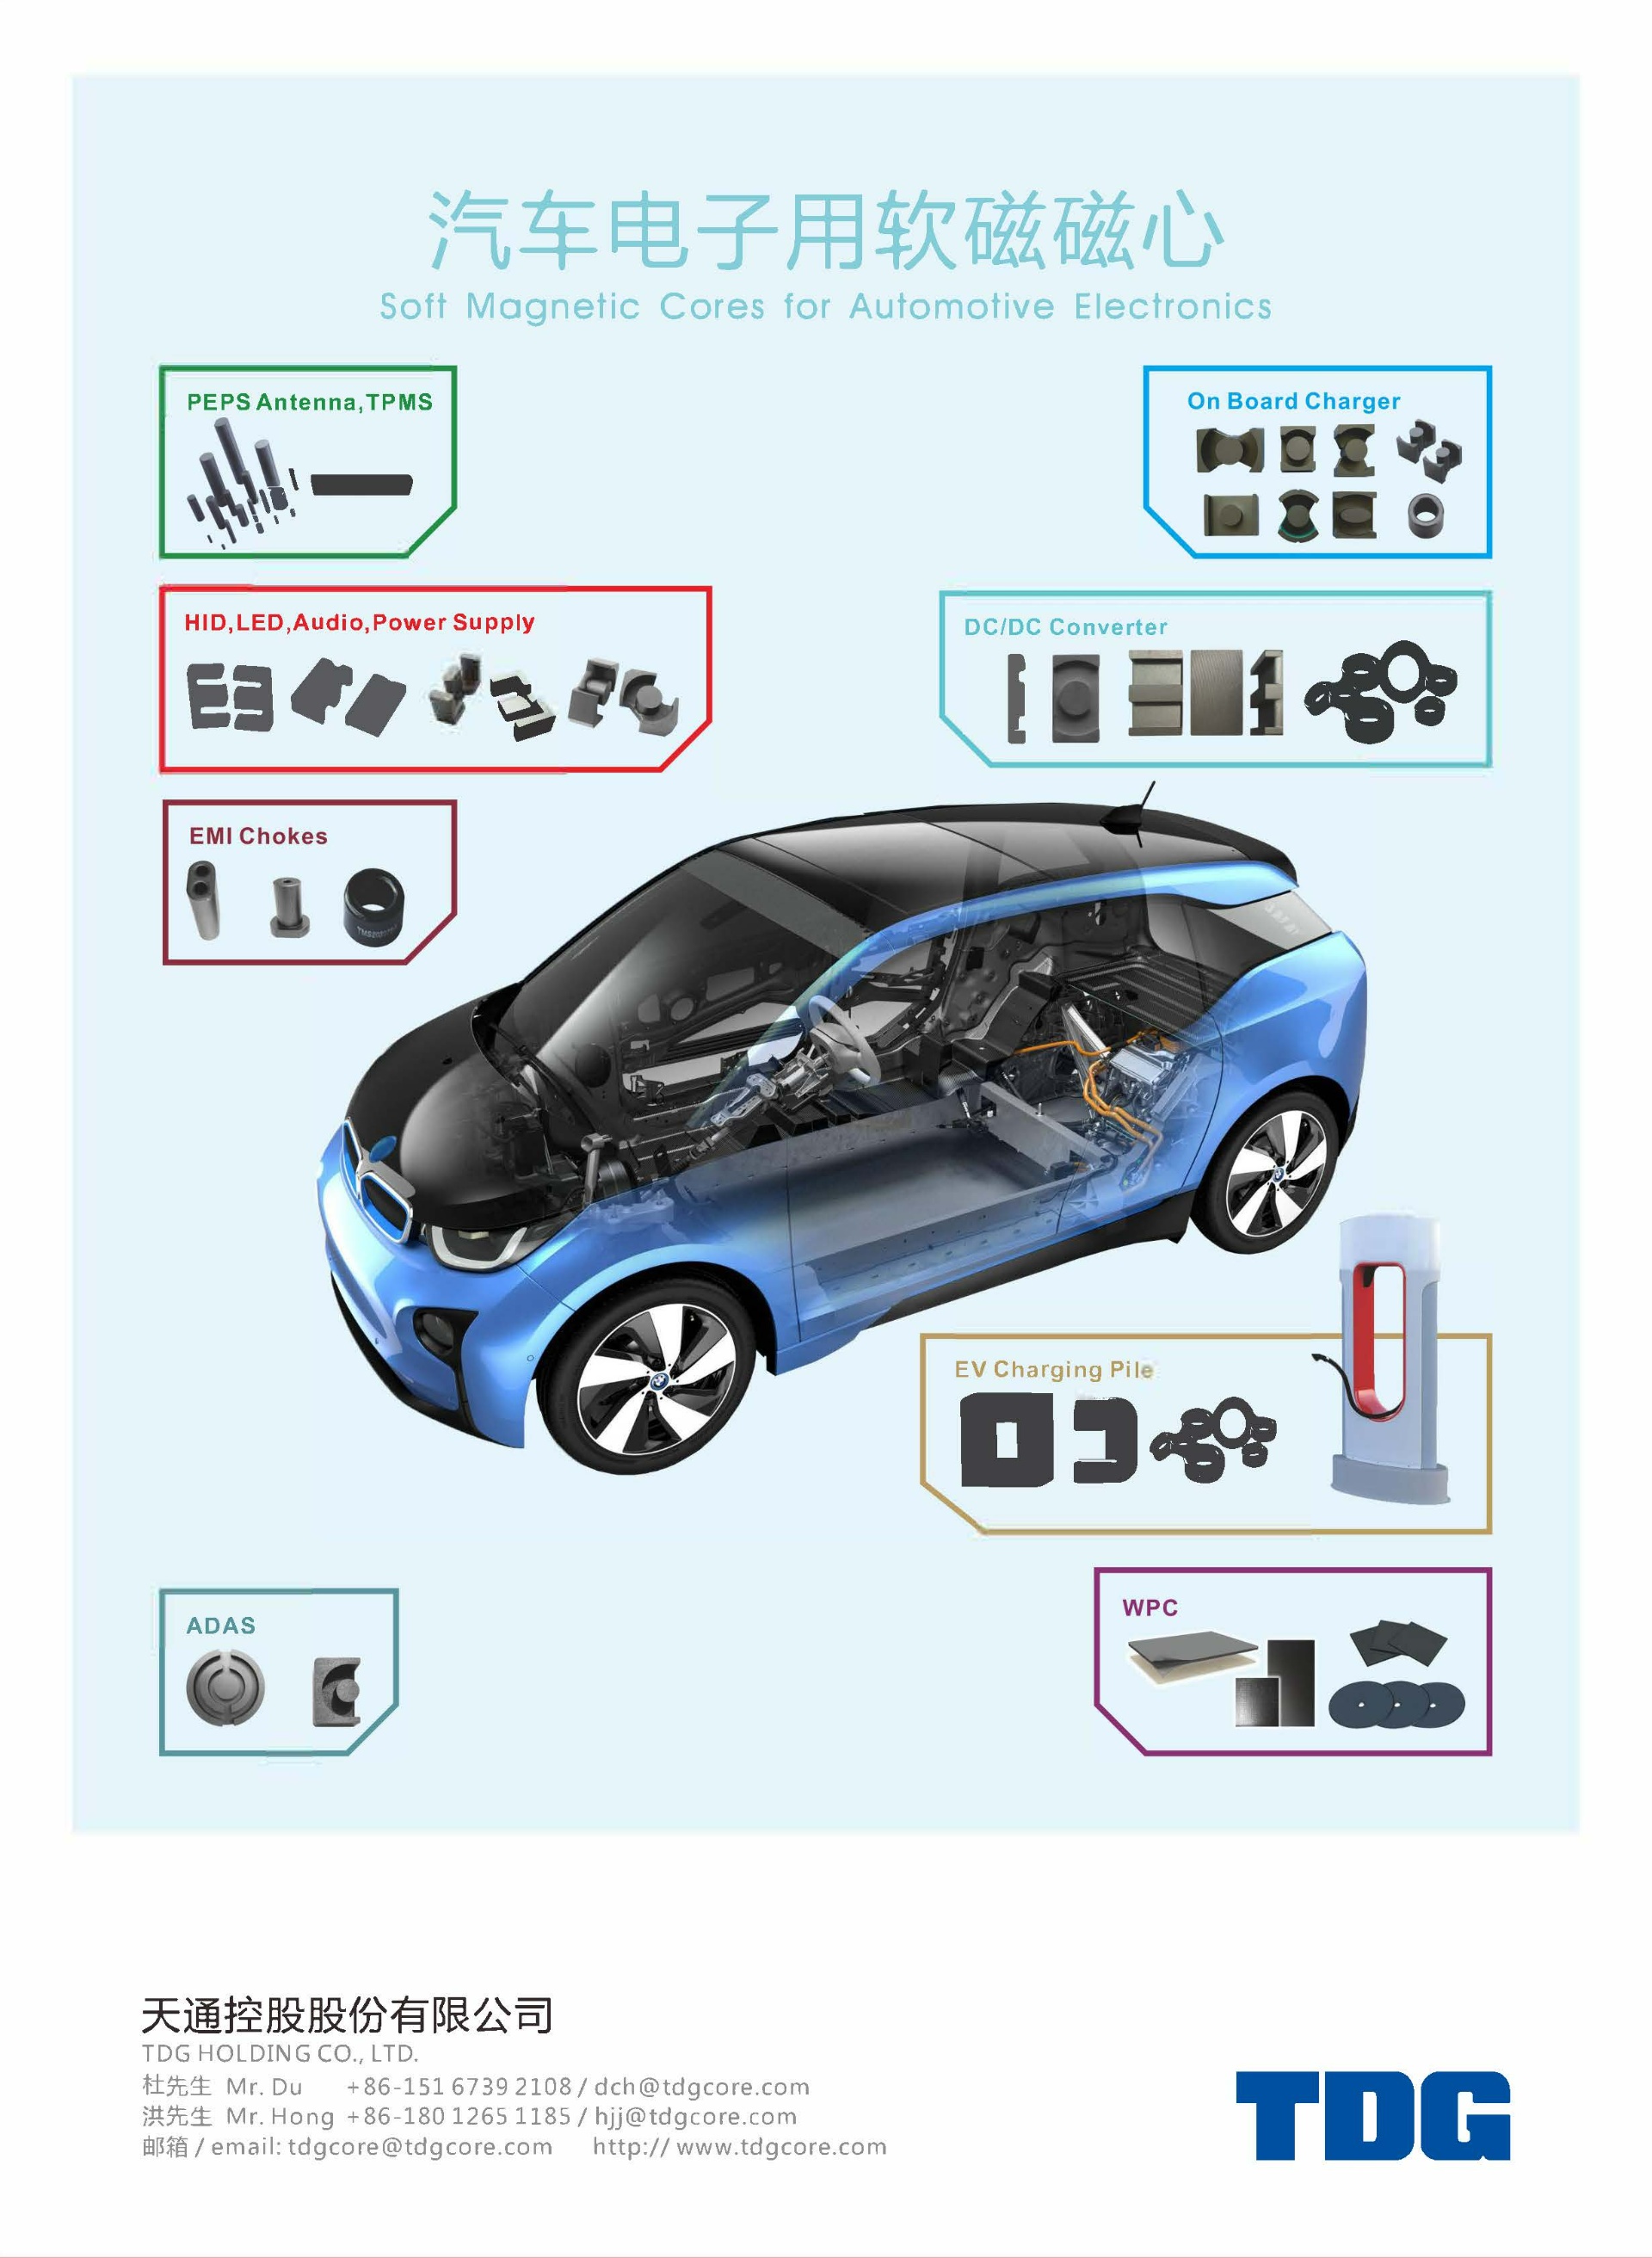 Soft Magnetic Cores for Automotive Electronics